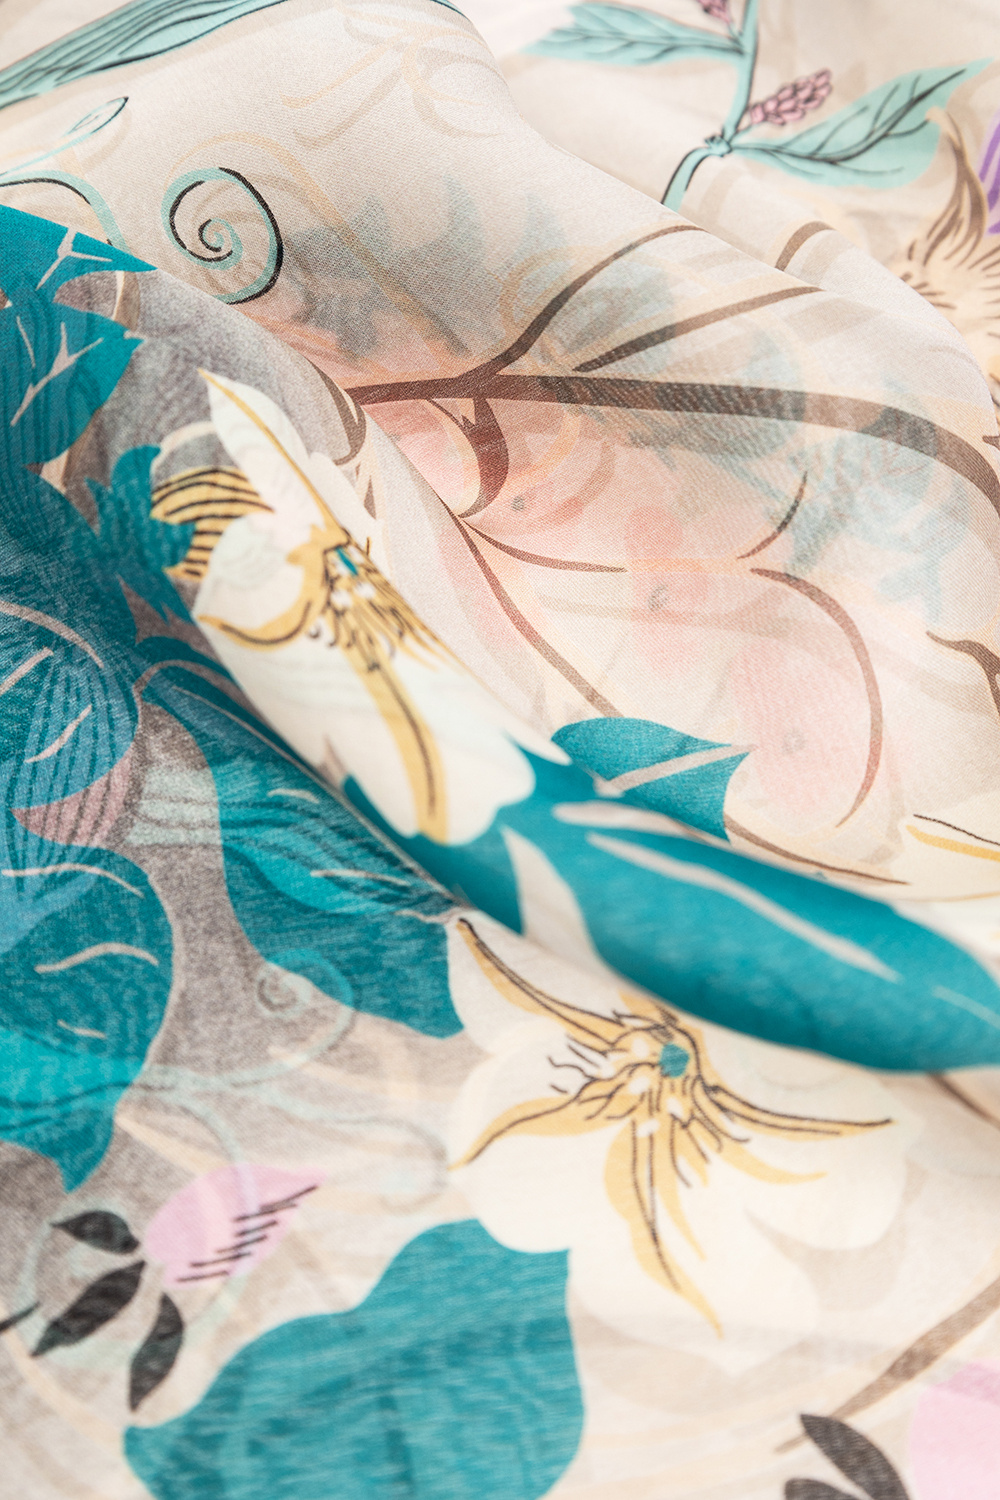 Silk Versace Inspired Designer Italian Print Fabric, Digital Prints,  Multicolour